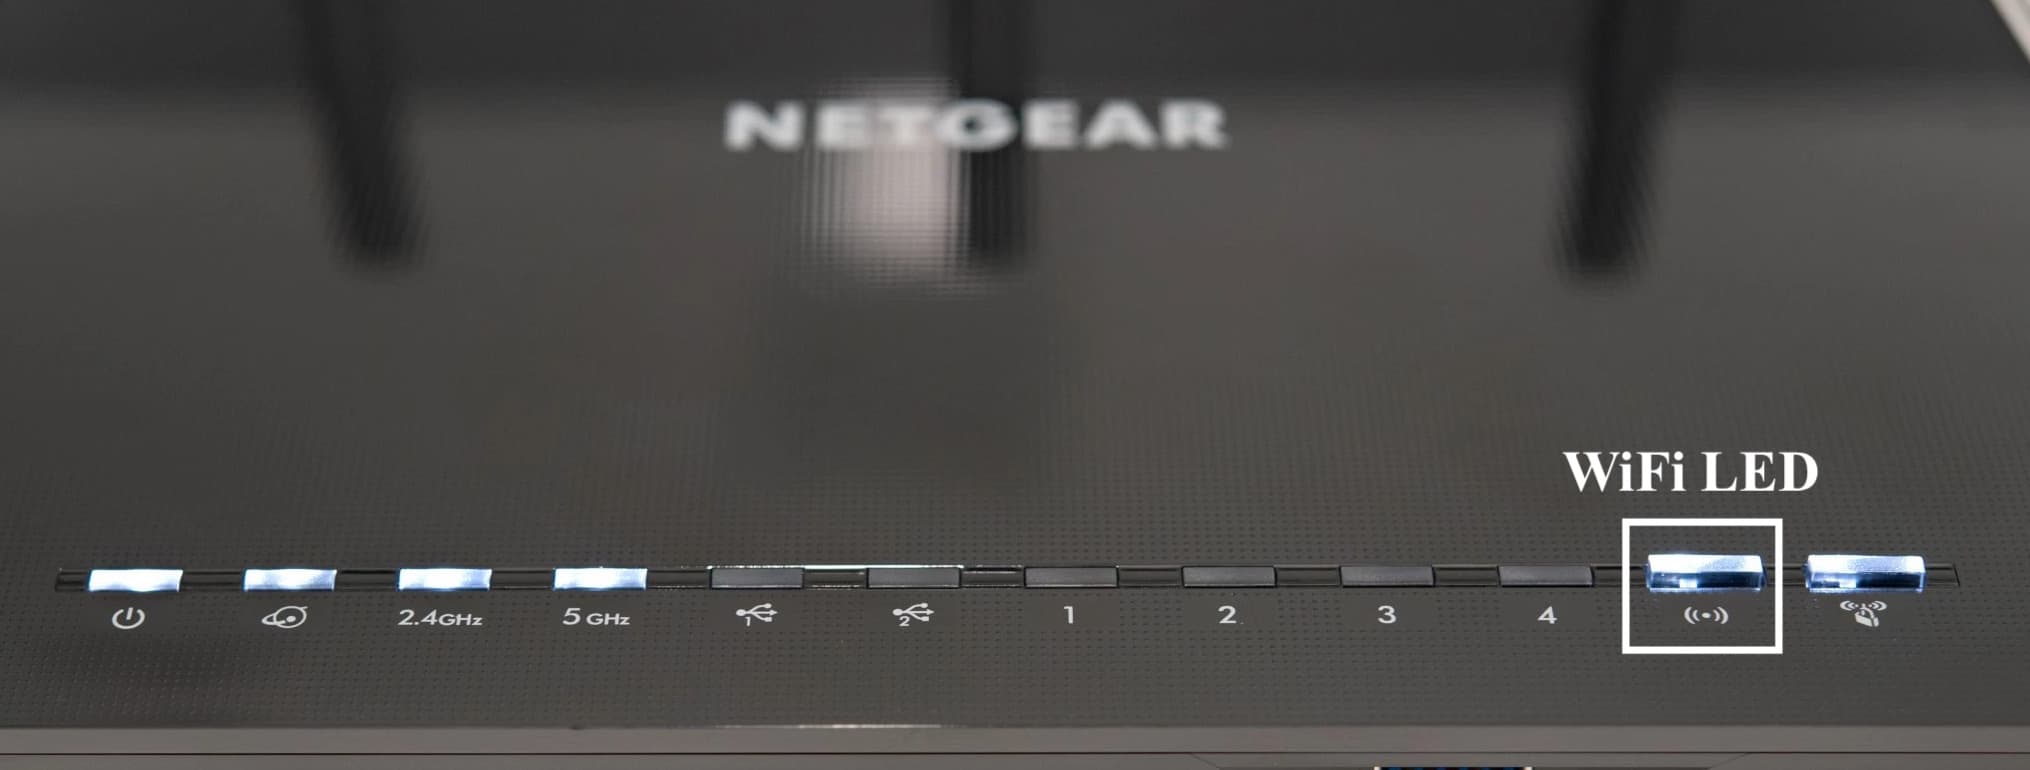 WiFi LED on Netgear Router